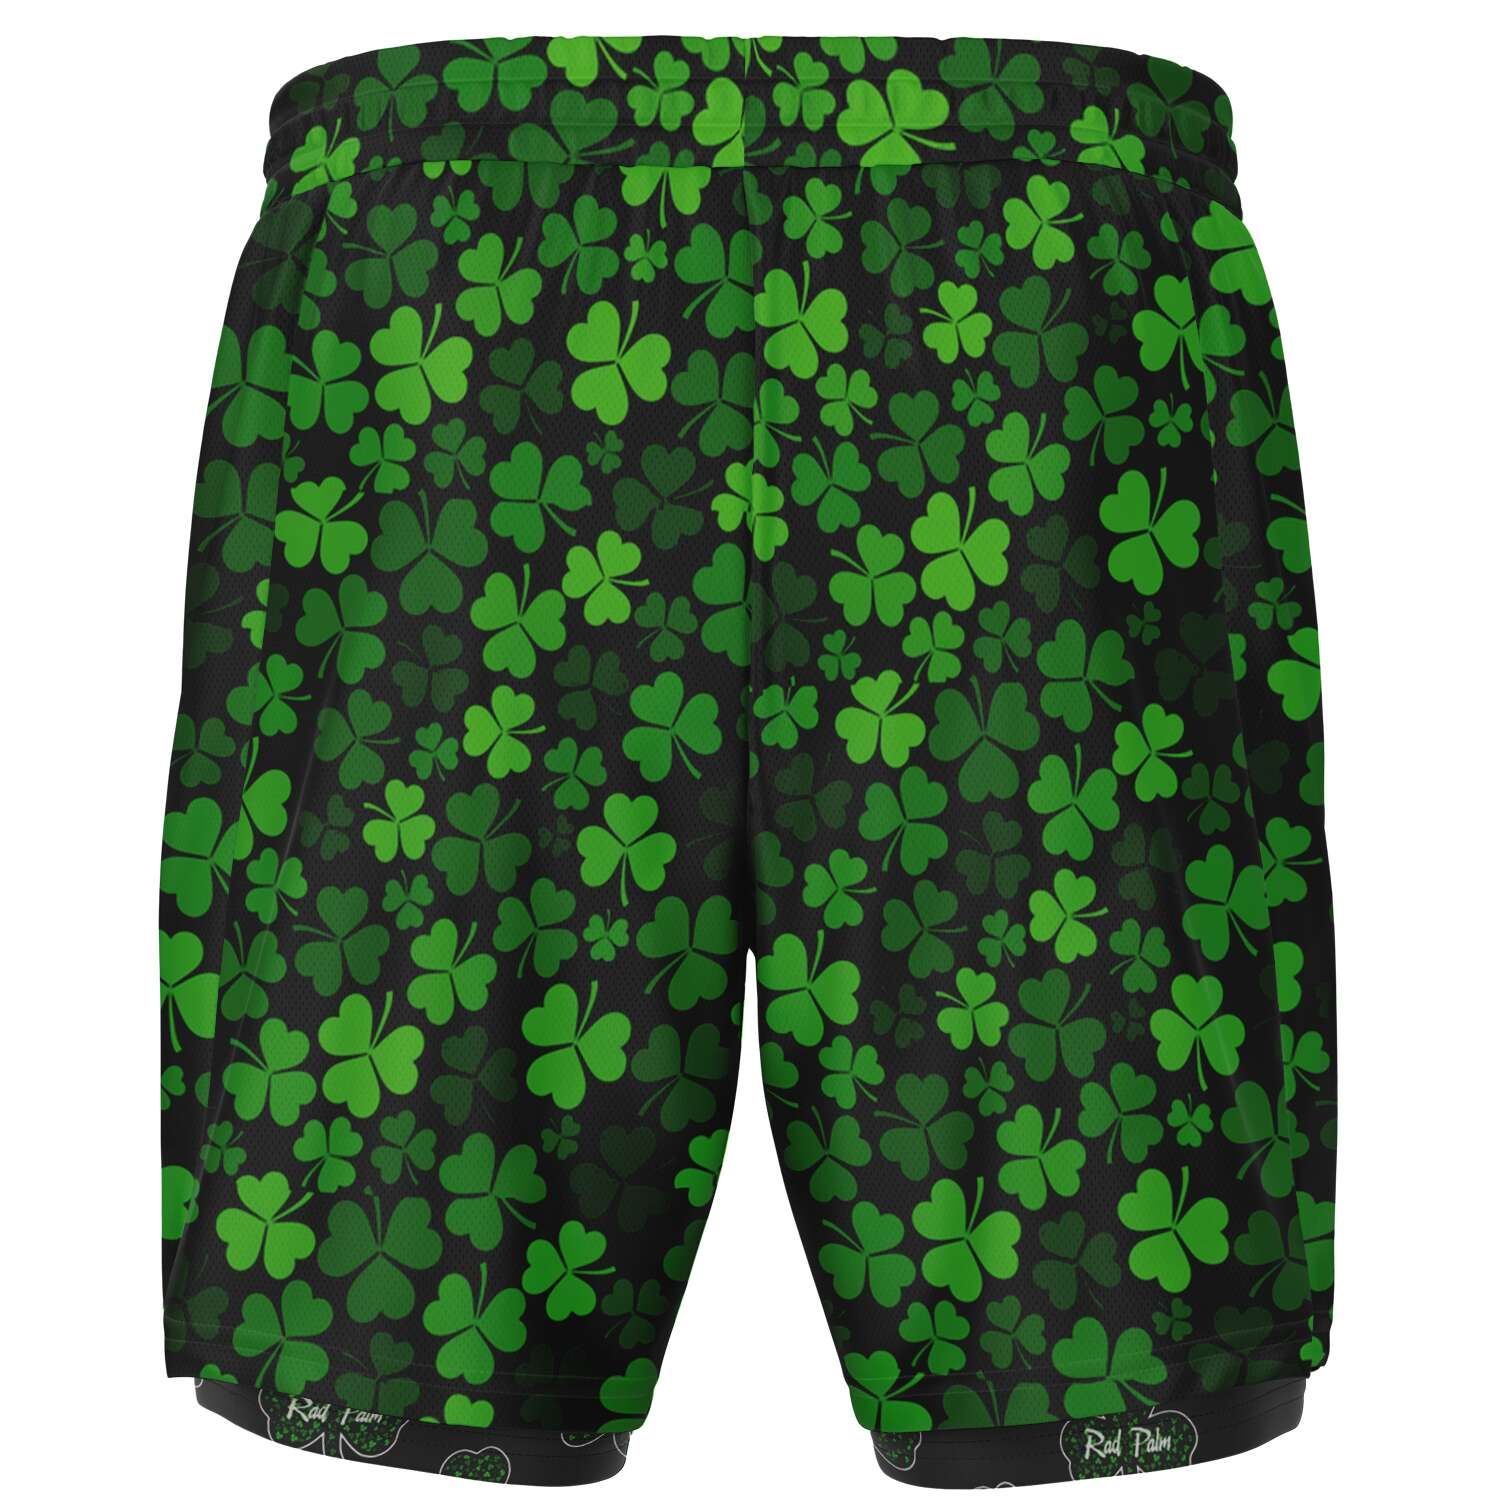 Rad Palm St. Patrick's Day Men's 2-in-1 Shorts